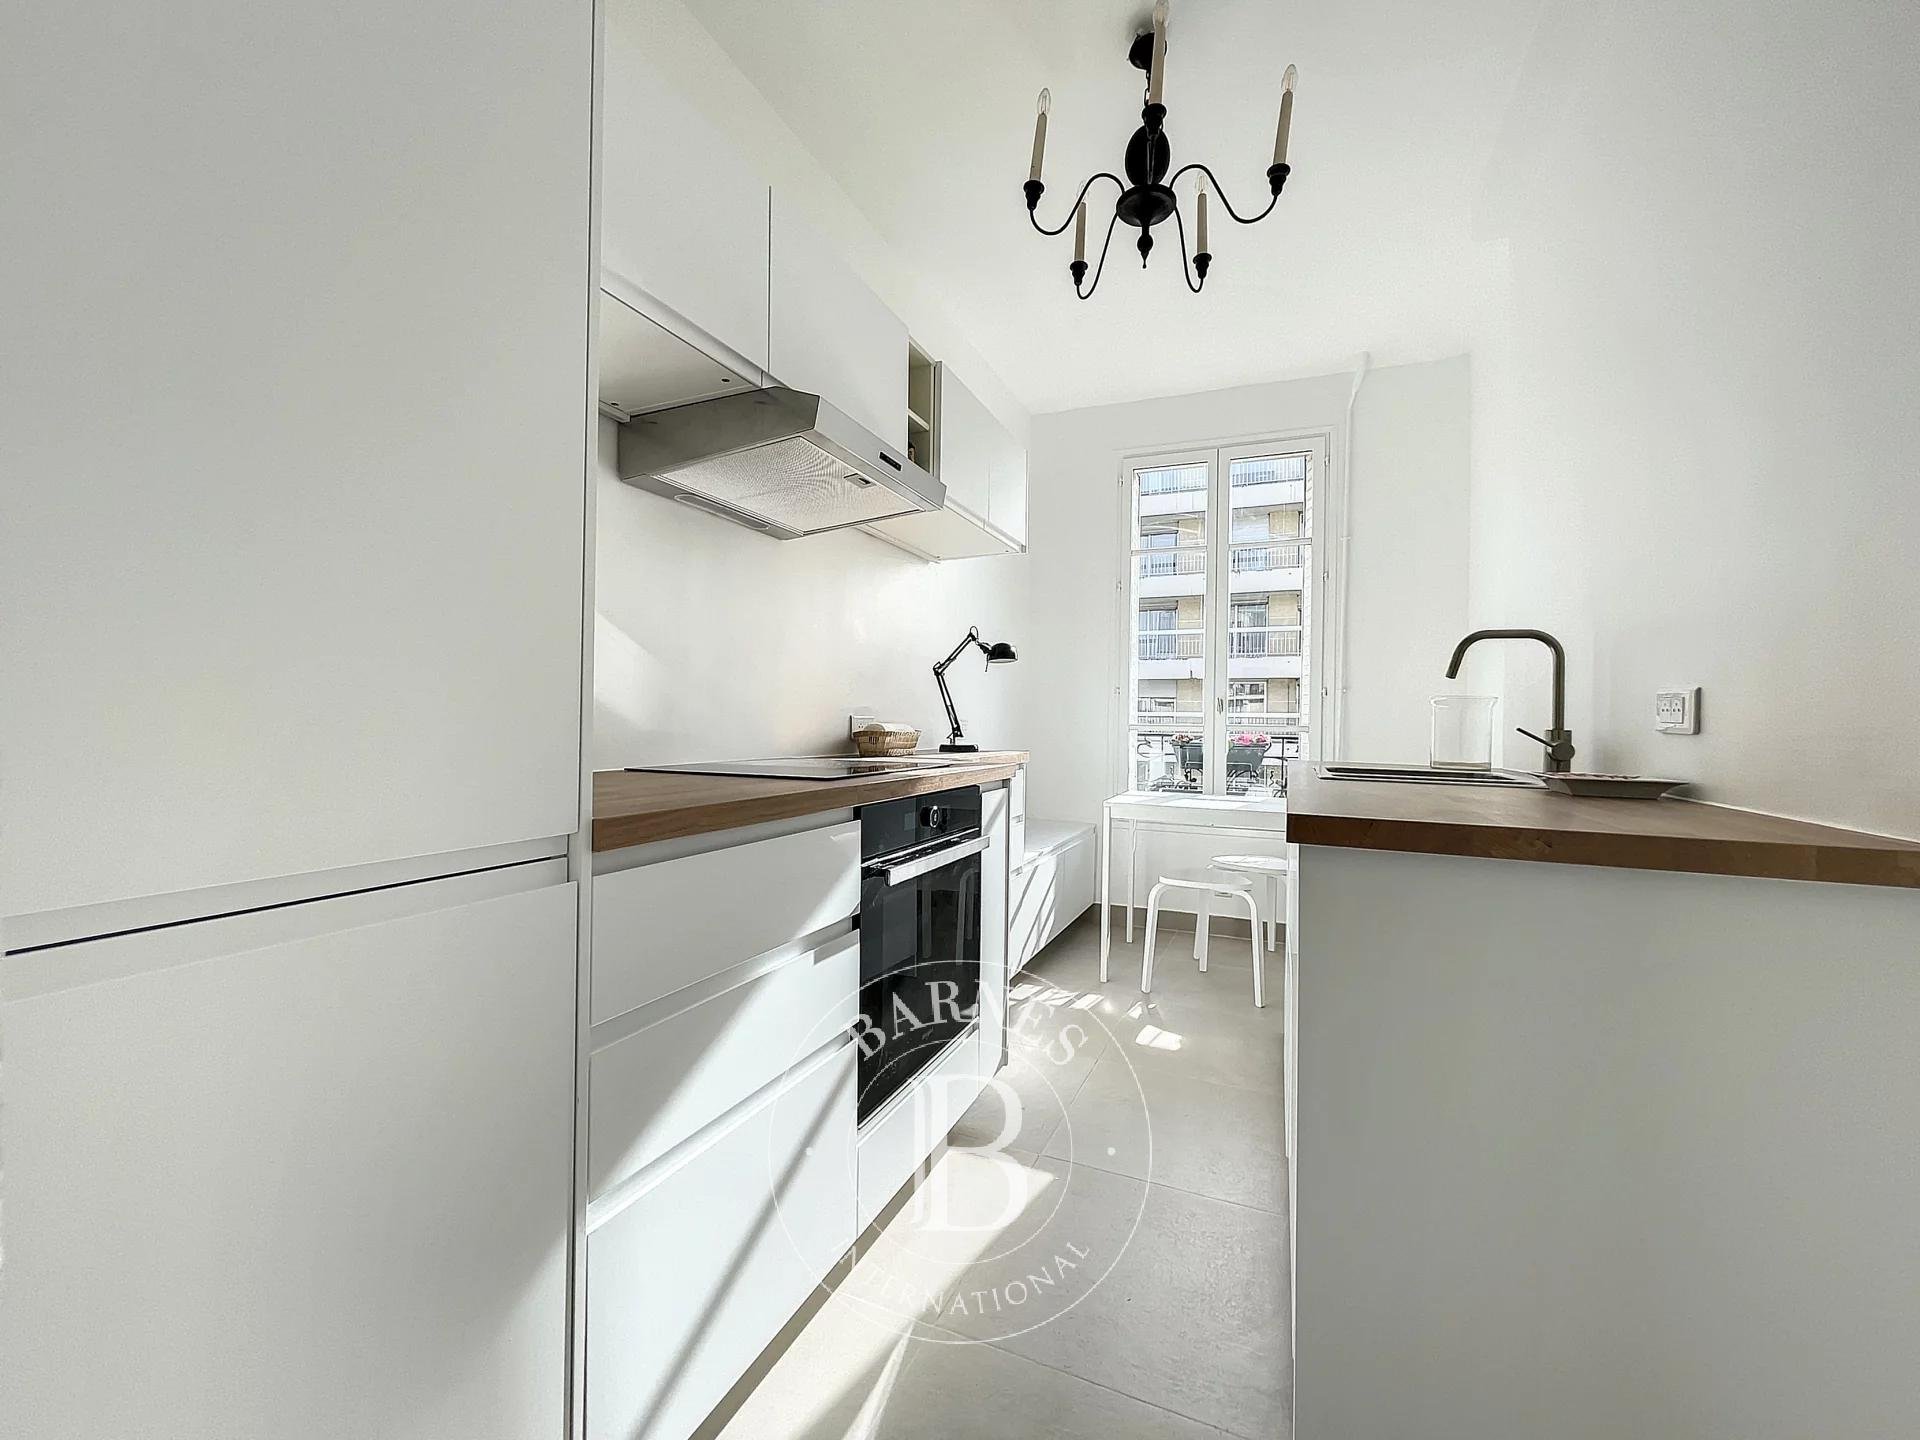 Appartement a louer neuilly-sur-seine - 2 pièce(s) - 42.43 m2 - Surfyn